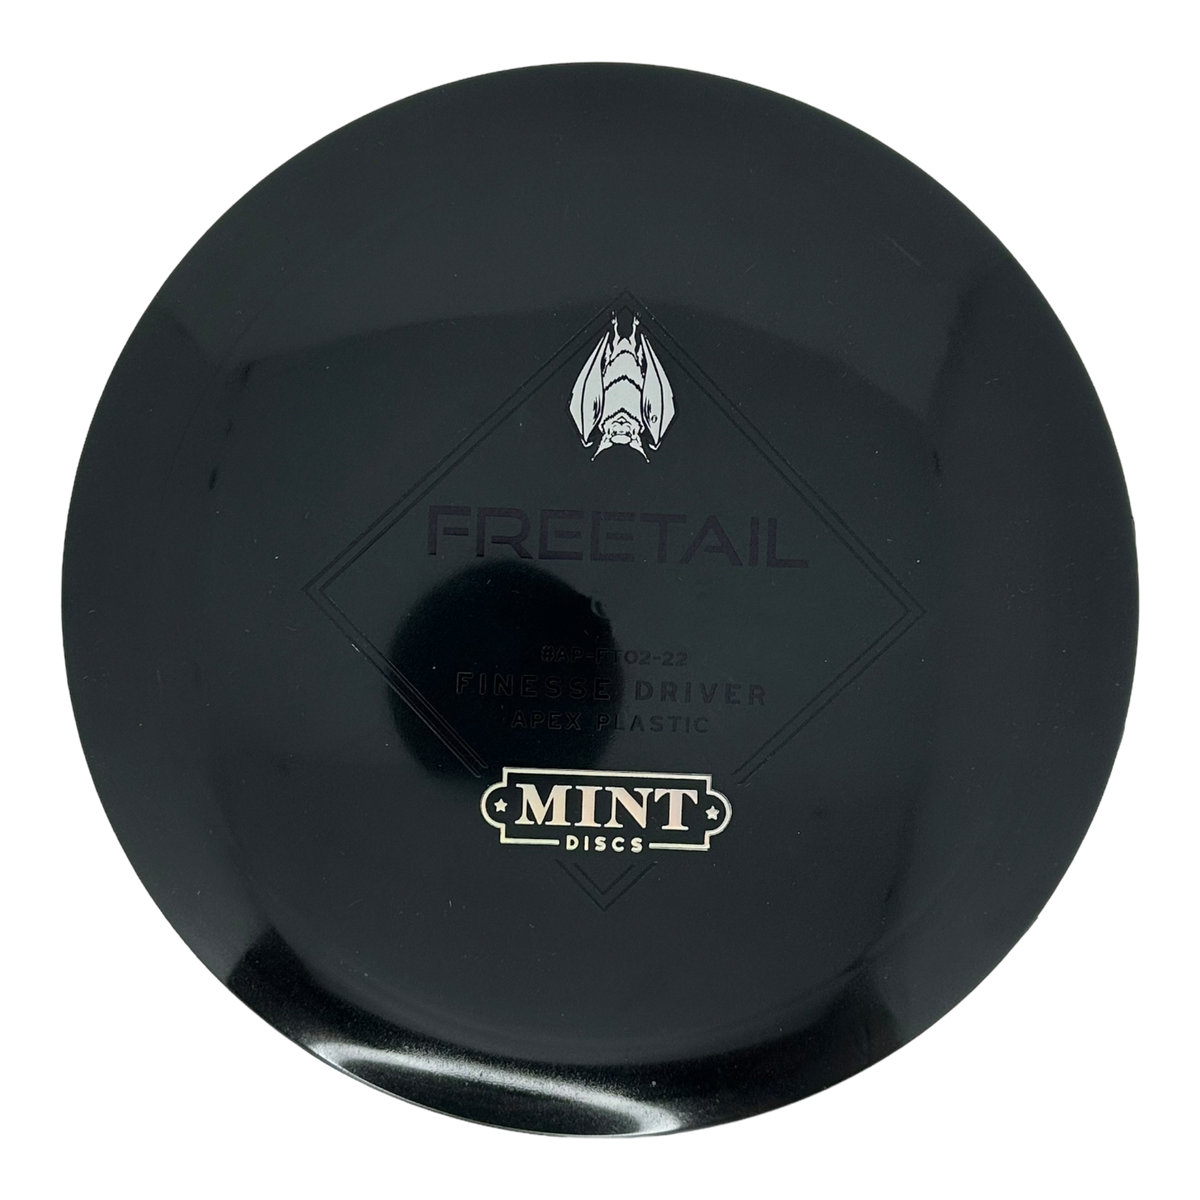 Mint Discs Apex Freetail